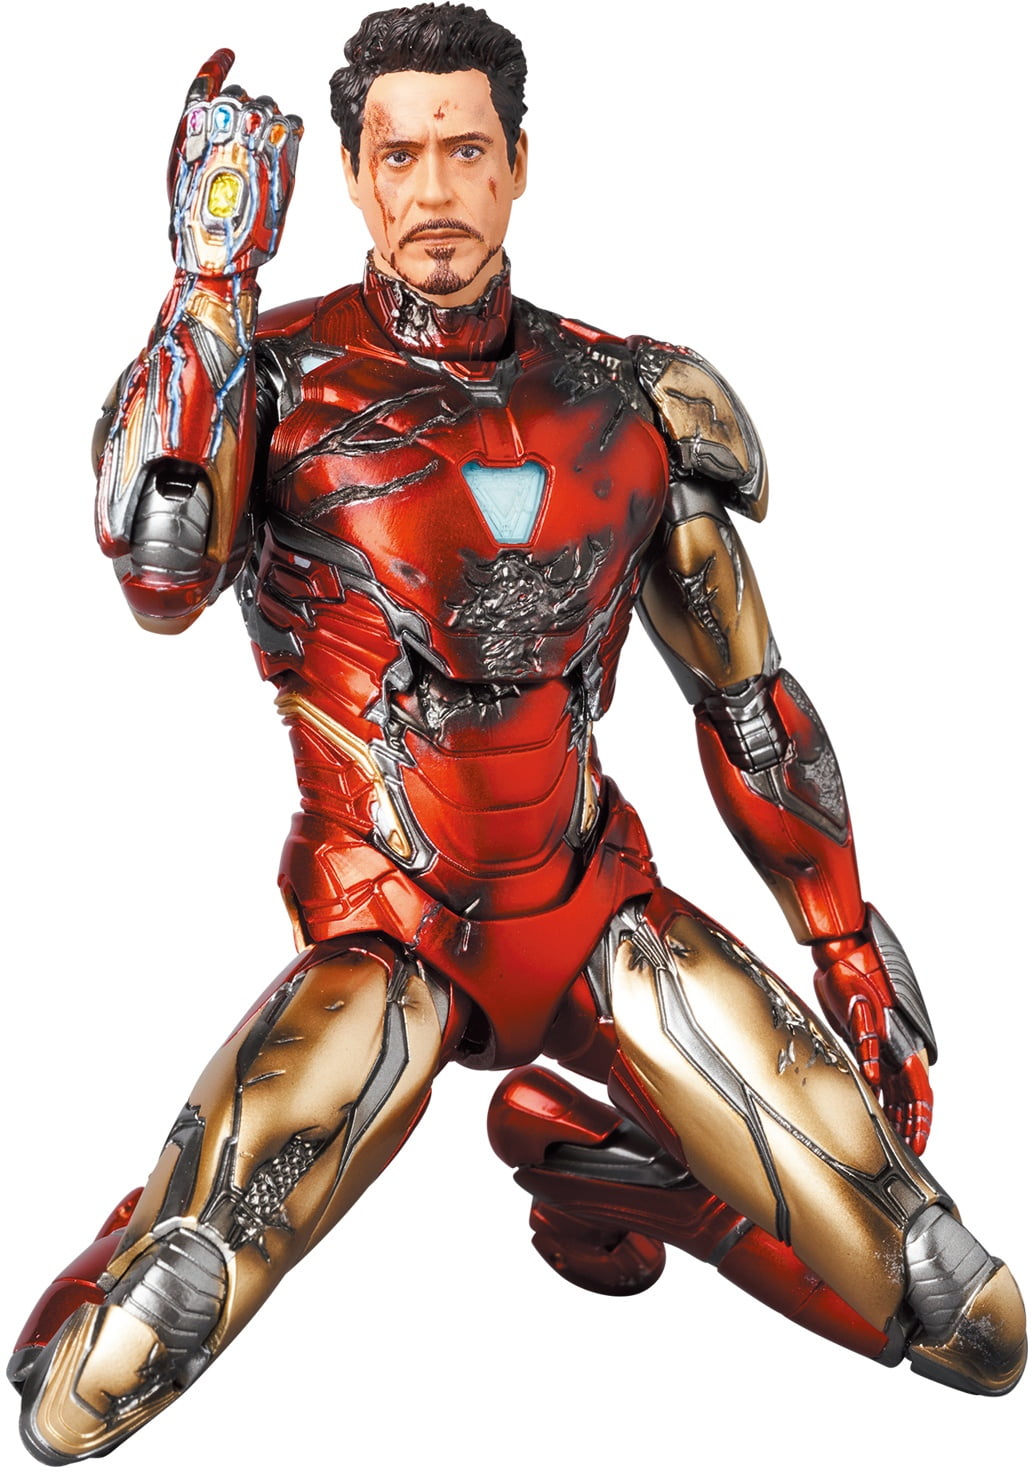 MAFEX Iron Man Mark 85 (Battle Damage Ver.) Action Figure